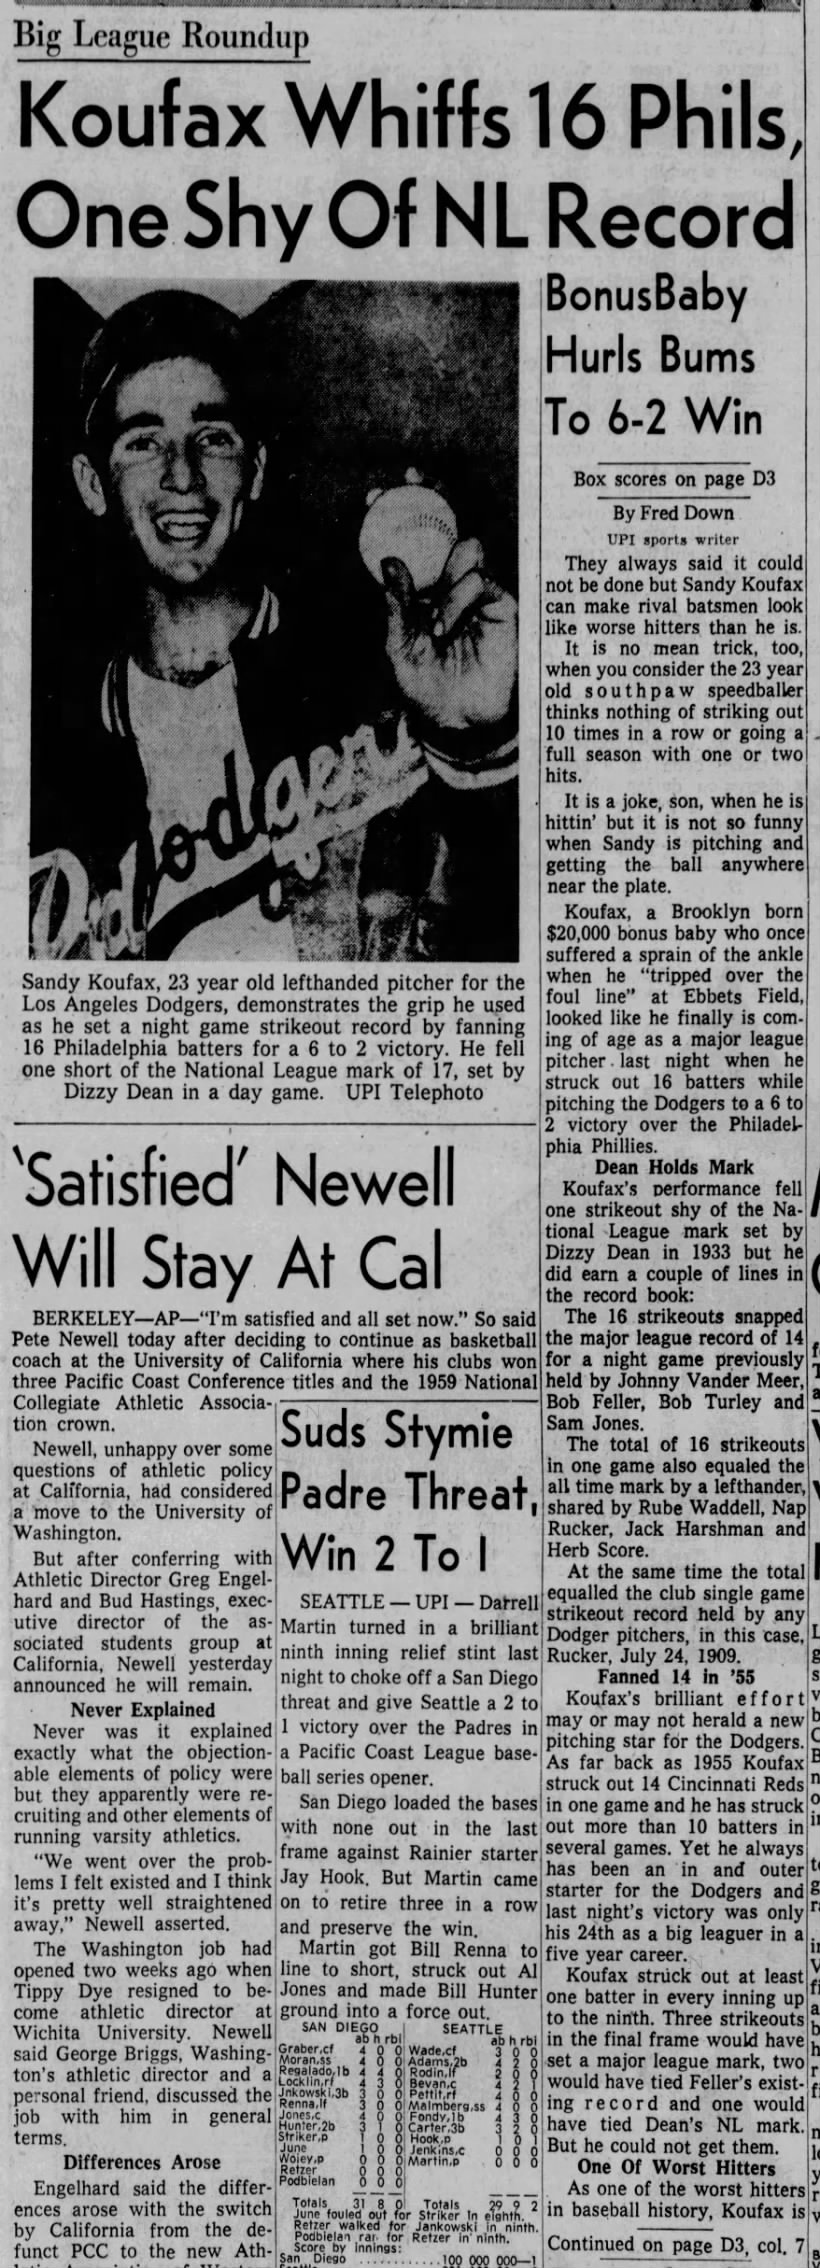 1959-06-23 MLB Notes - 23yo Sandy Koufax Ks 16 - 1 shy of Dizzy Dean's record